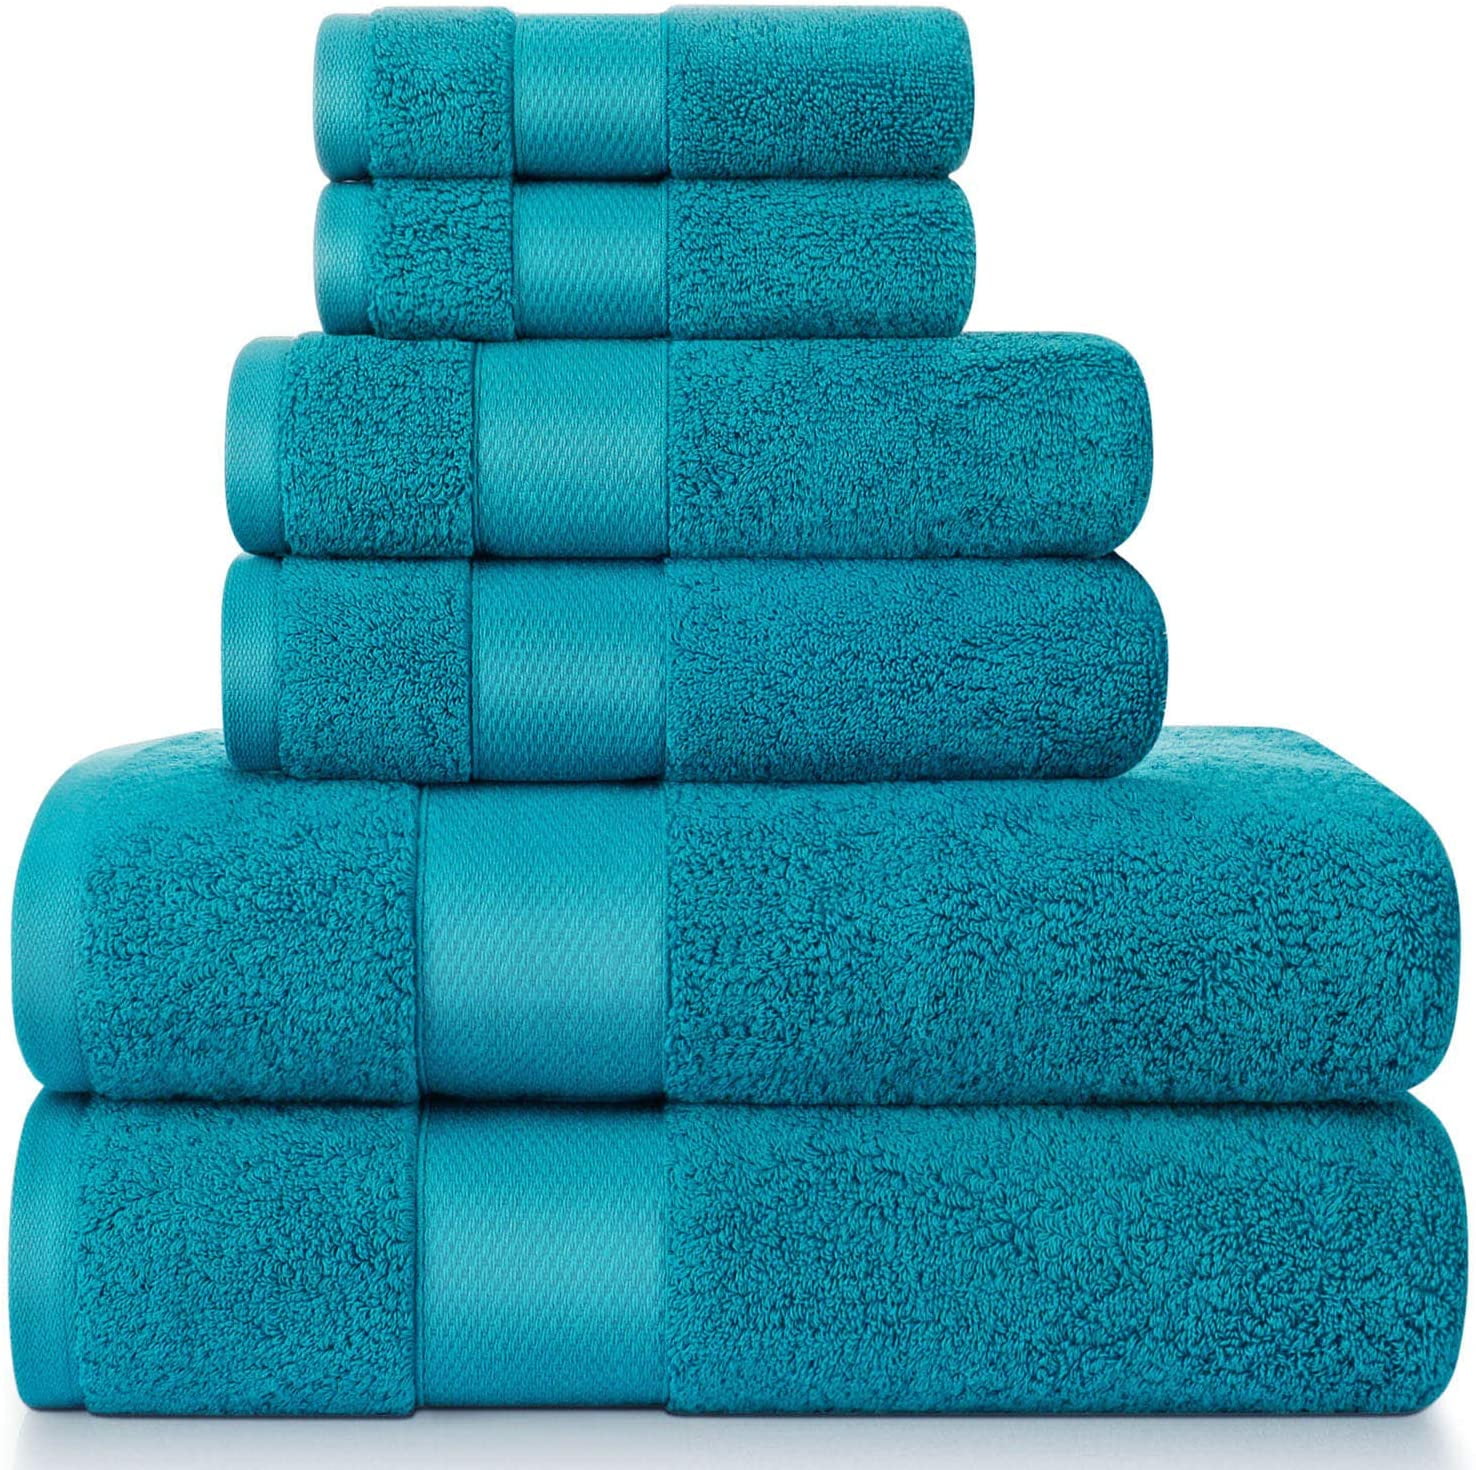 3 Piece Set Luxury Turquoise Premium Quality Face/Hand Towel Bath Towel Bath Sheet Pure 100% Egyptian Cotton GSM 600 